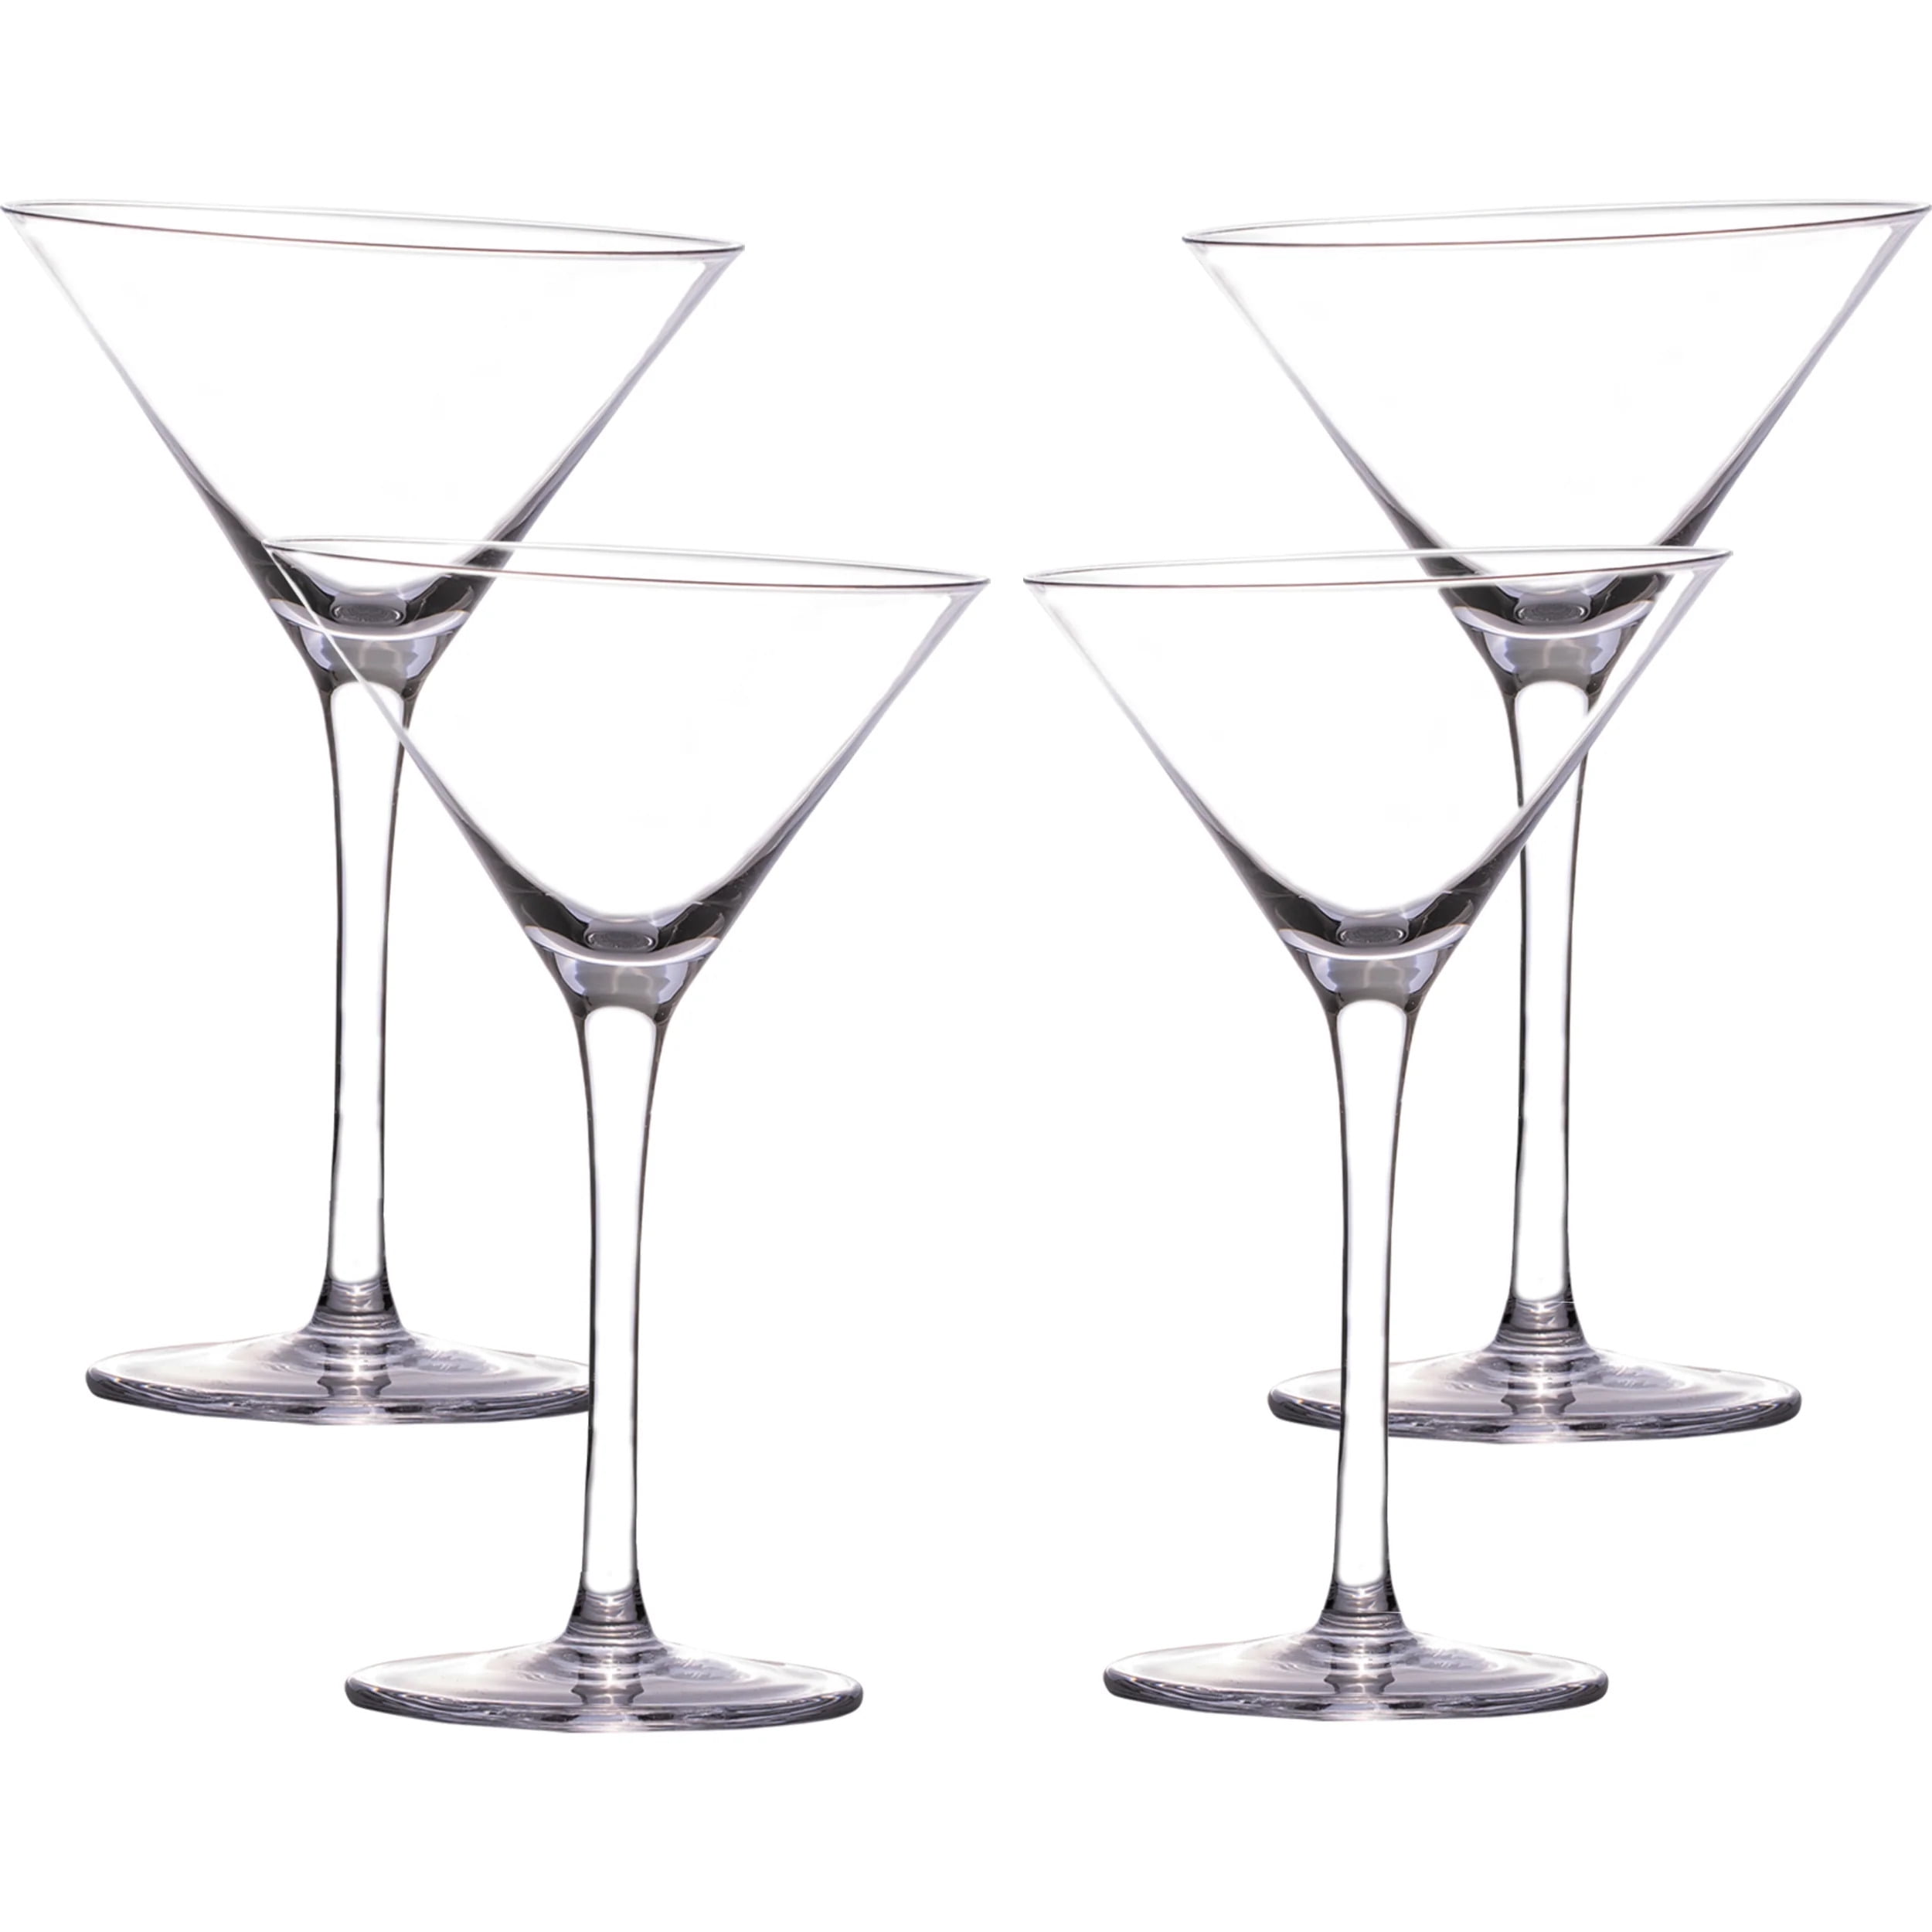 Grace Era Martini Glasses Set Cocktail Glass Set Premium Glassware Set, for Bar Martini, Cosmopolitan, Gimlet, Vodka, Gin, and Cocktails, Fancy